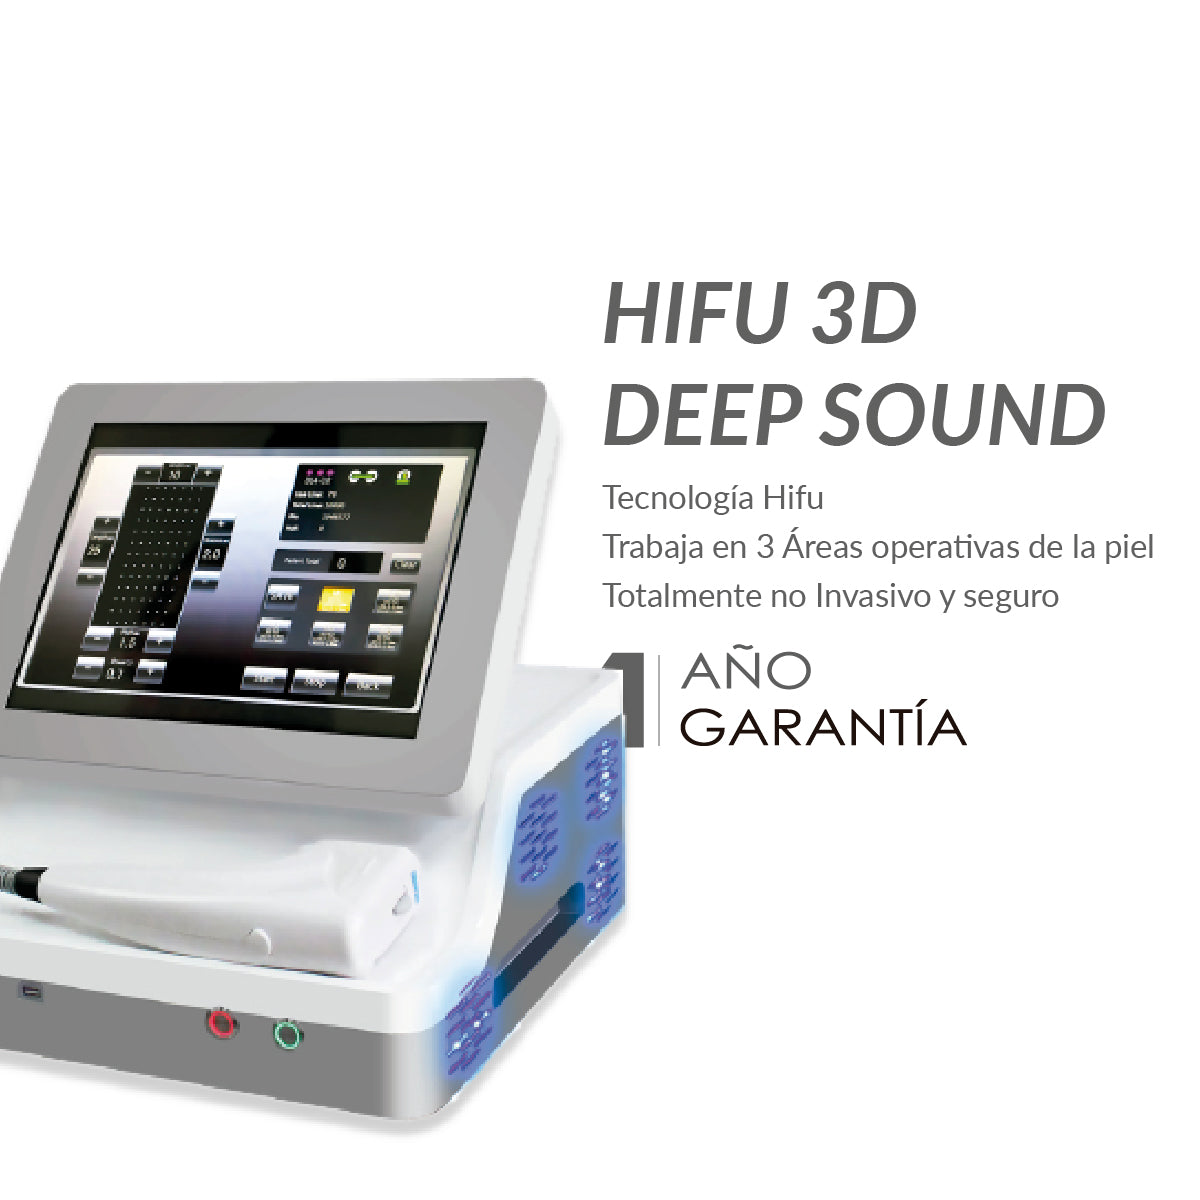 HIFU 3D Deep Sound